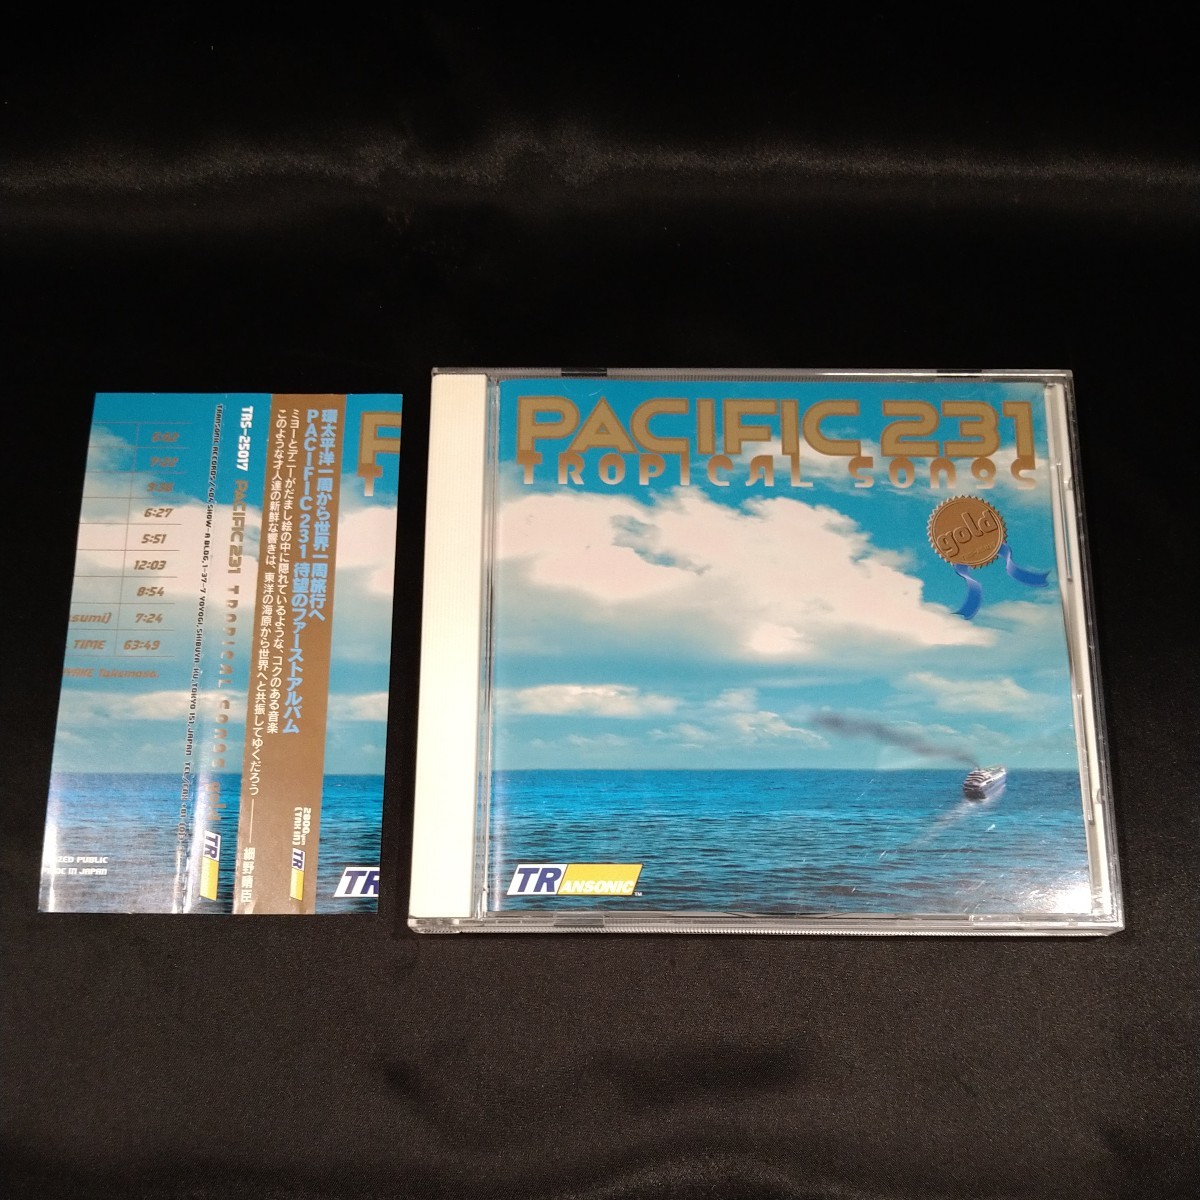 CD Pacific 231 Tropical Songs Gold 蓮実重臣 三宅剛正 細野晴臣による推薦文の帯付き  TRS-25017 CD0037